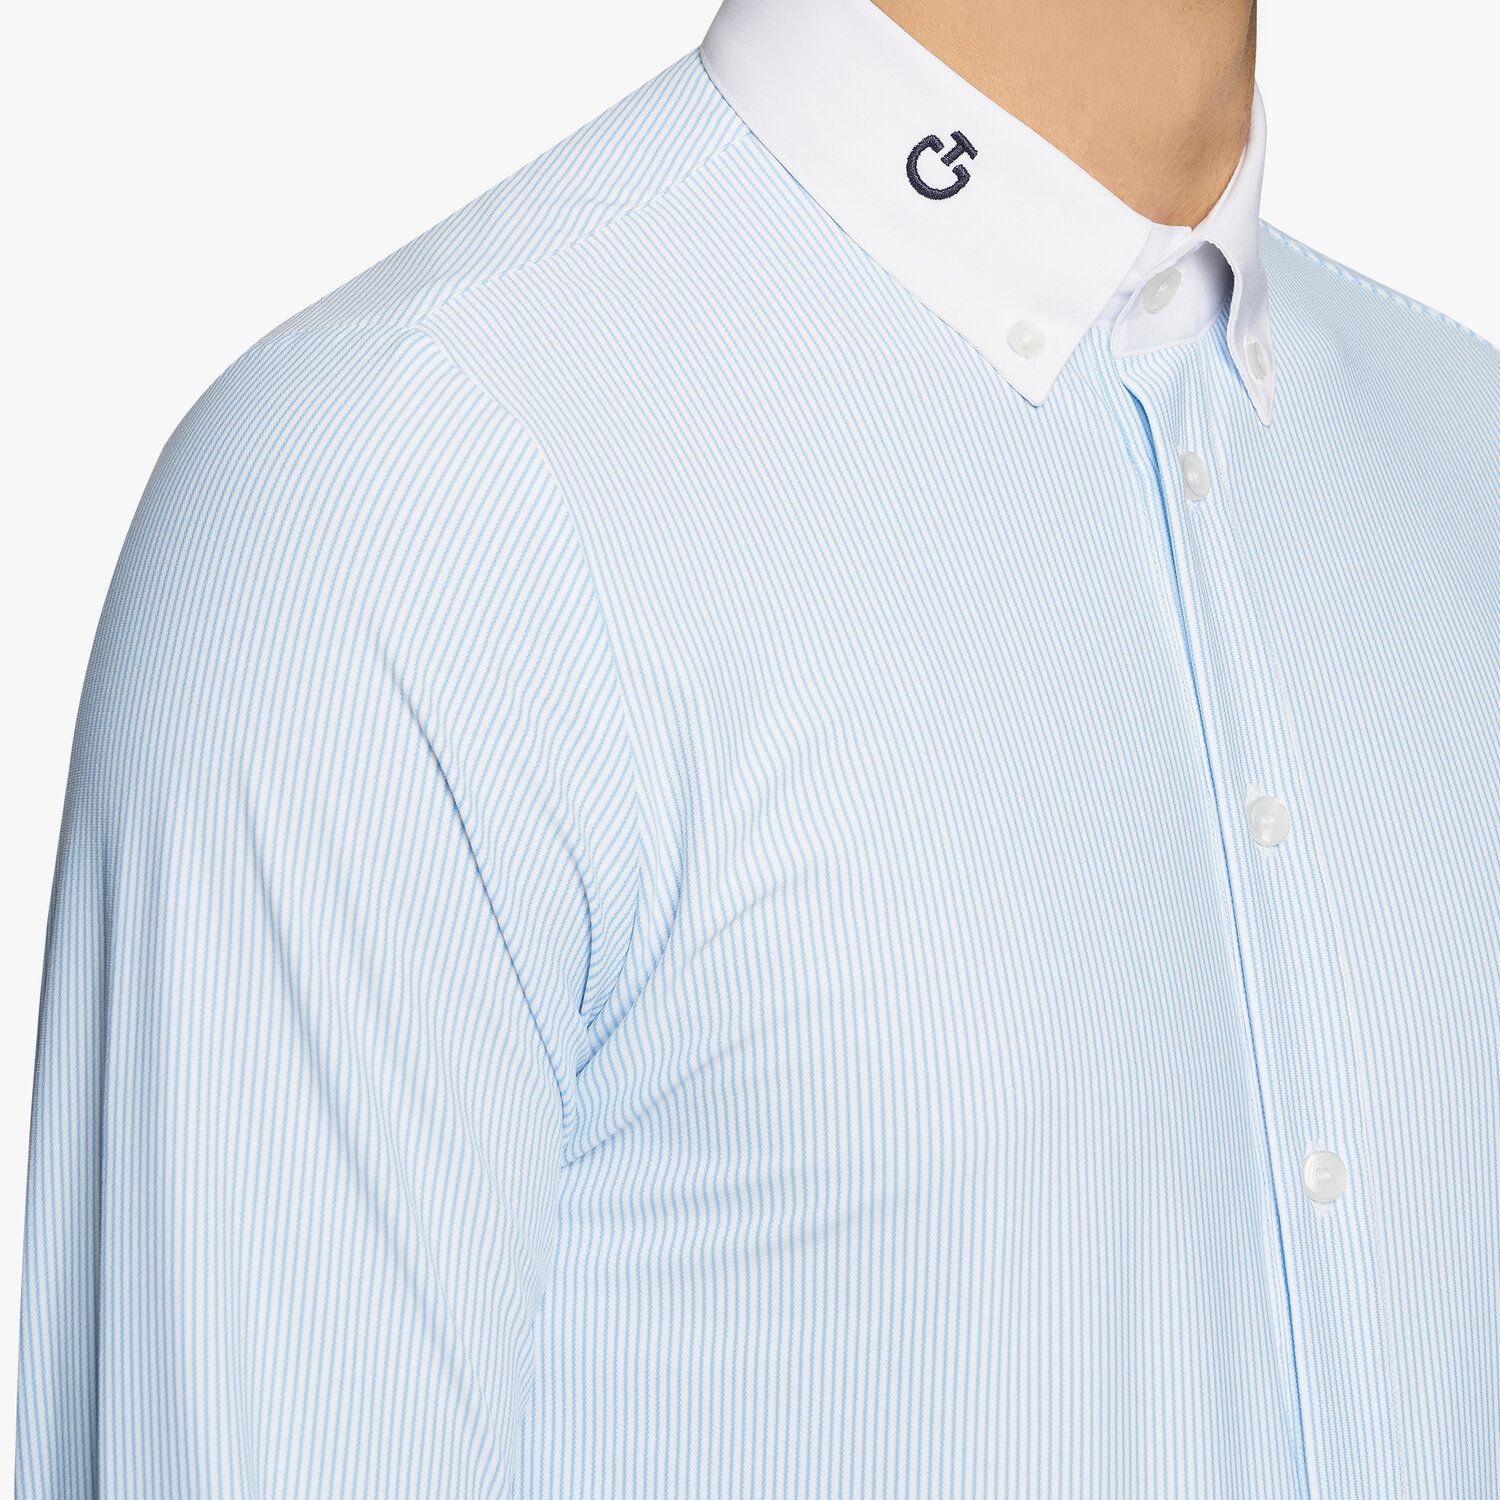 Cavalleria Toscana Men's button-down long-sleeved shirt. Q760-4